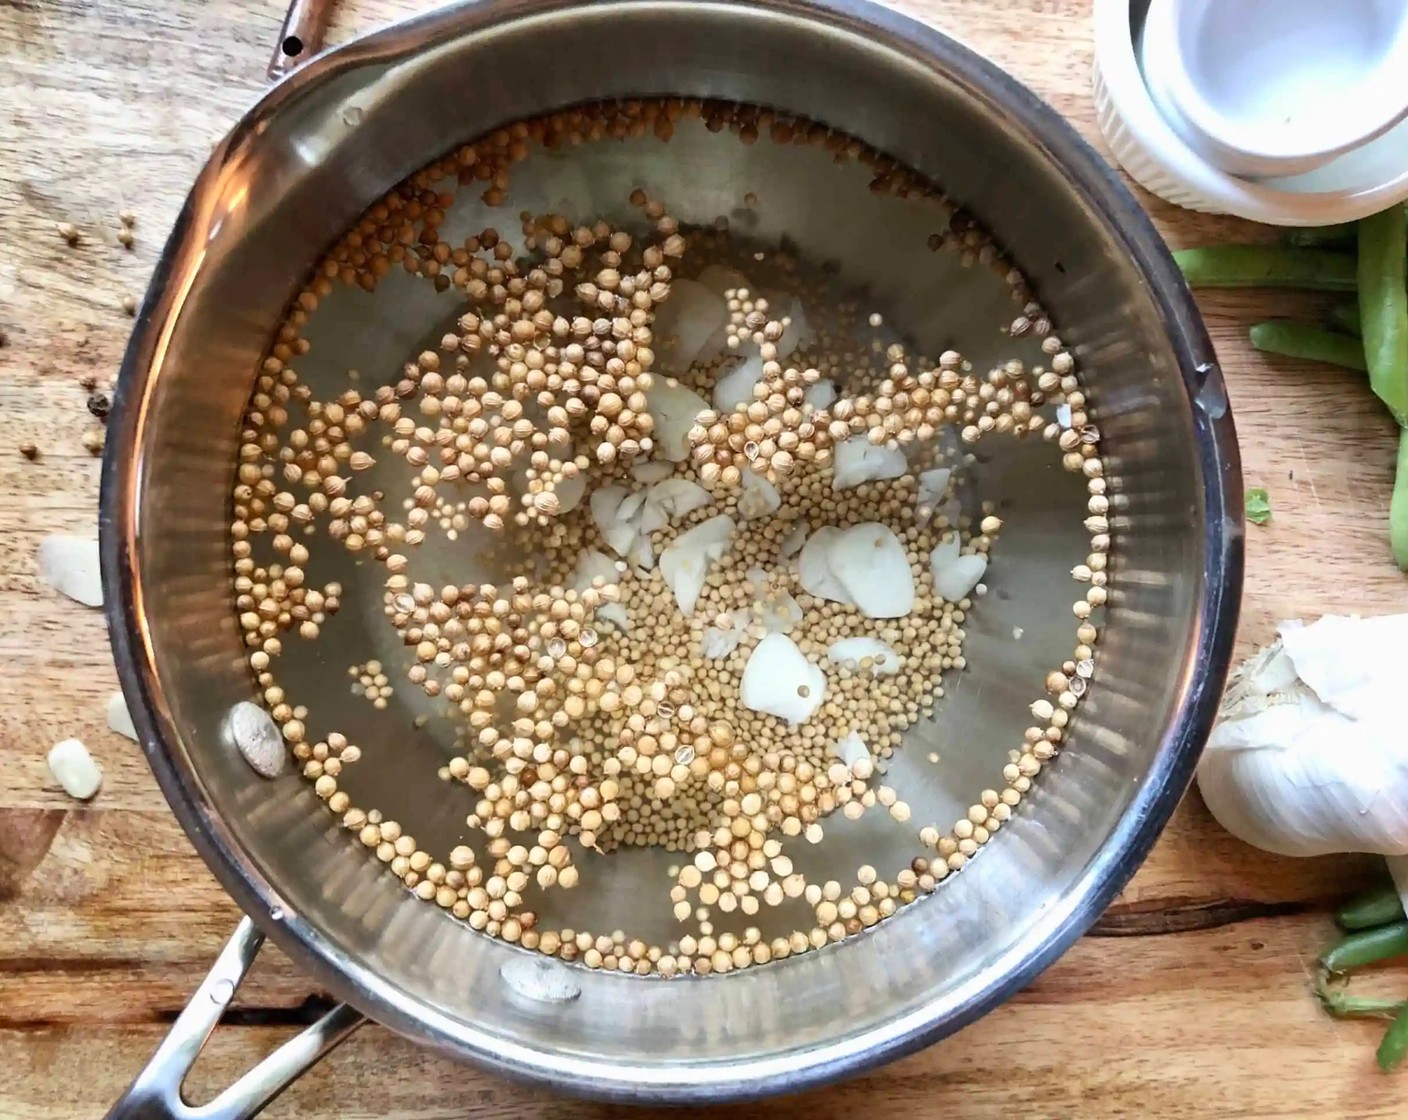 step 1 In a small pot, combine the Distilled White Vinegar (1 1/2 cups), Water (1 cup), Kosher Salt (2 Tbsp), Granulated Sugar (2 Tbsp), Mustard Seeds (1 Tbsp), aWhole Coriander Seeds (1 Tbsp), and Garlic (1 clove). Bring to a boil.